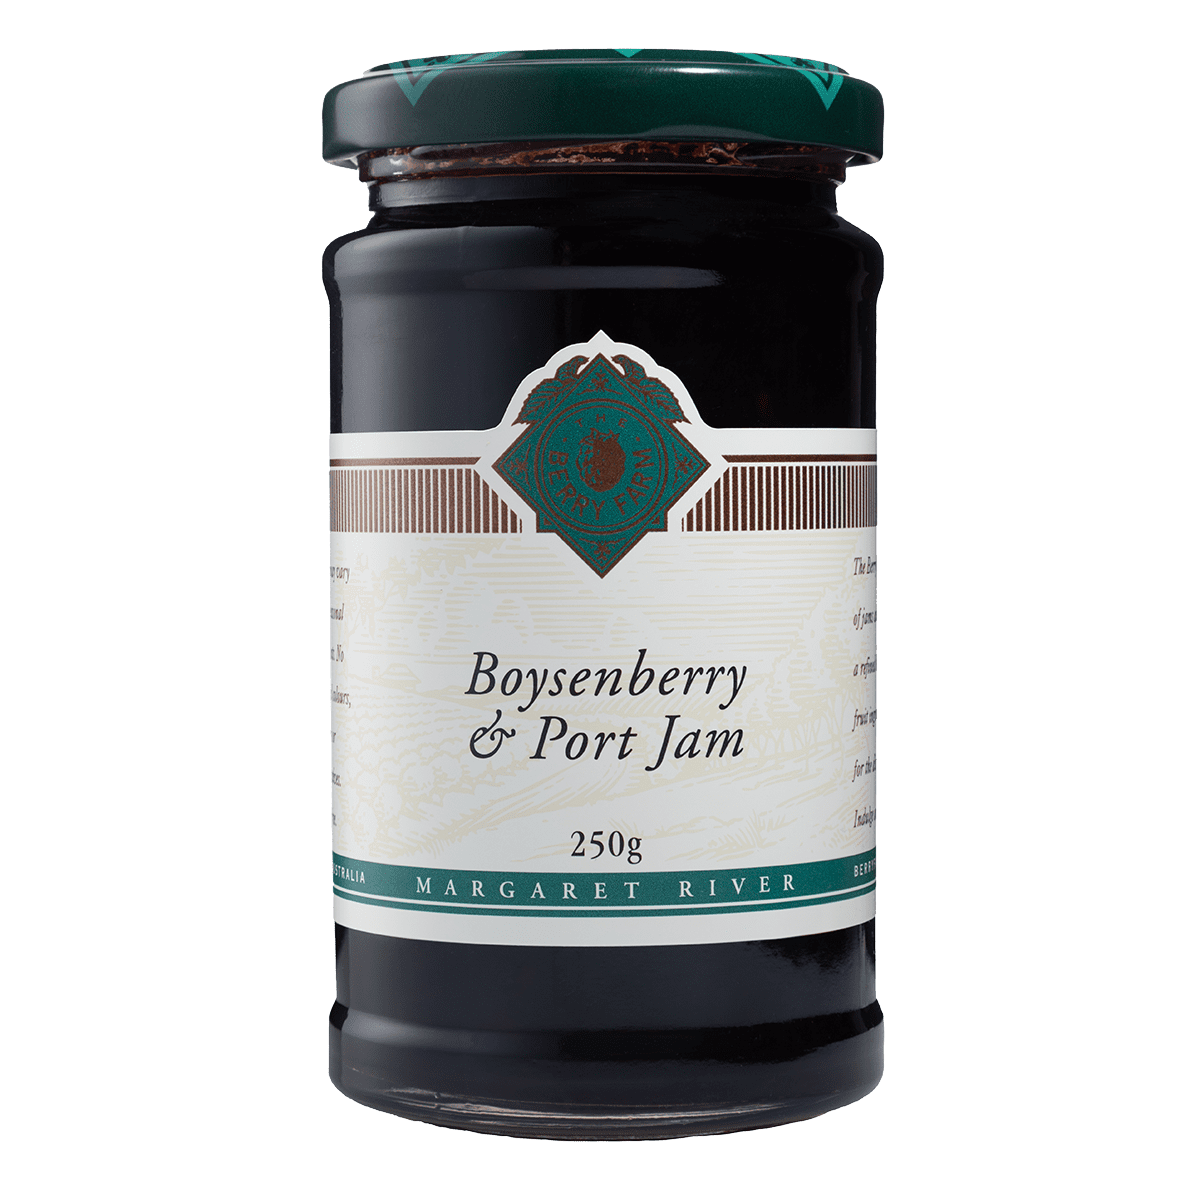 A jar of Boysenberry & Port Jam